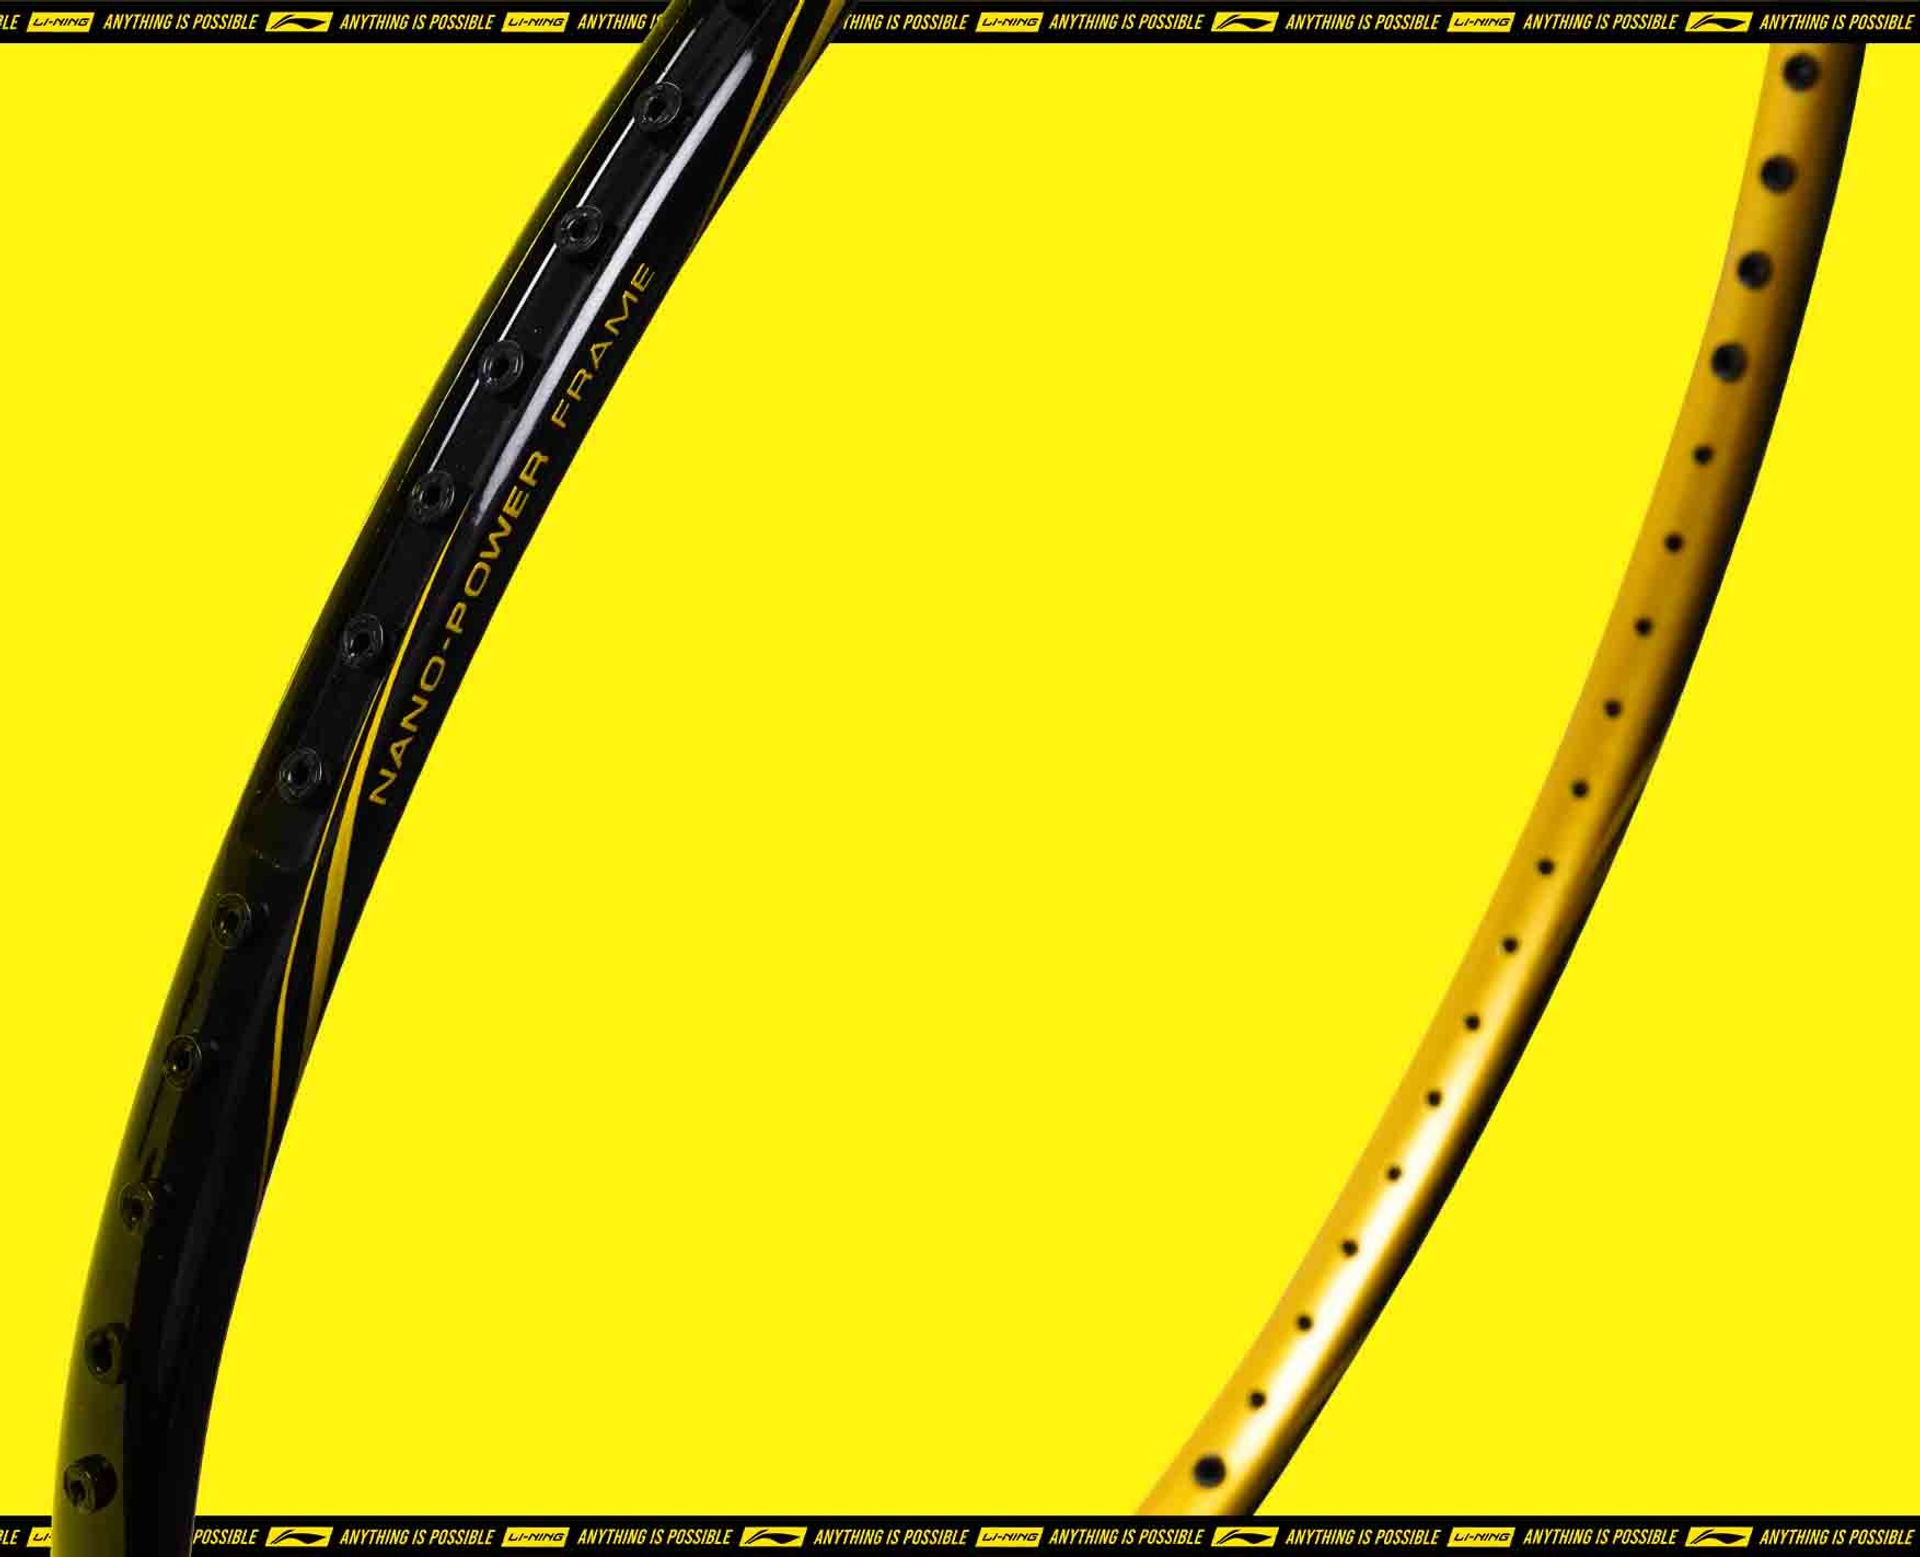 Close up view of Turbo X G5 badminton racket frame by Li-Ning Studio